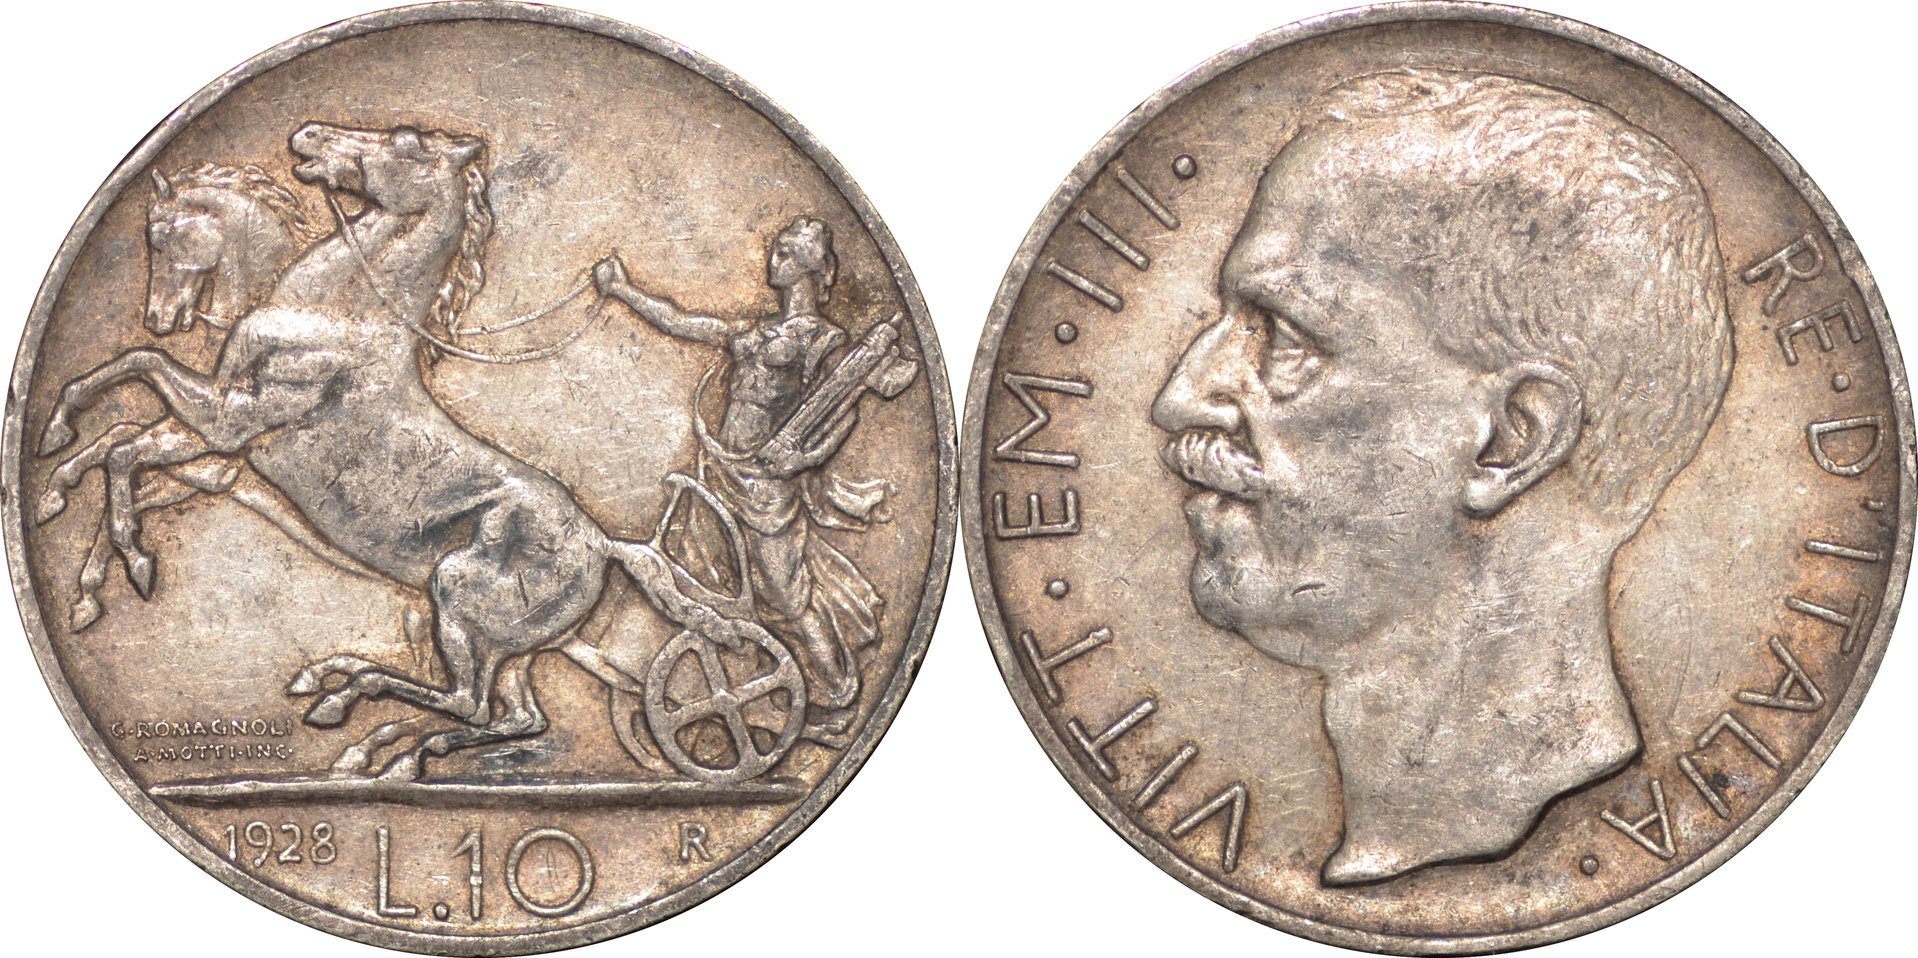 Italy - 1928 R 10 Lire.jpg